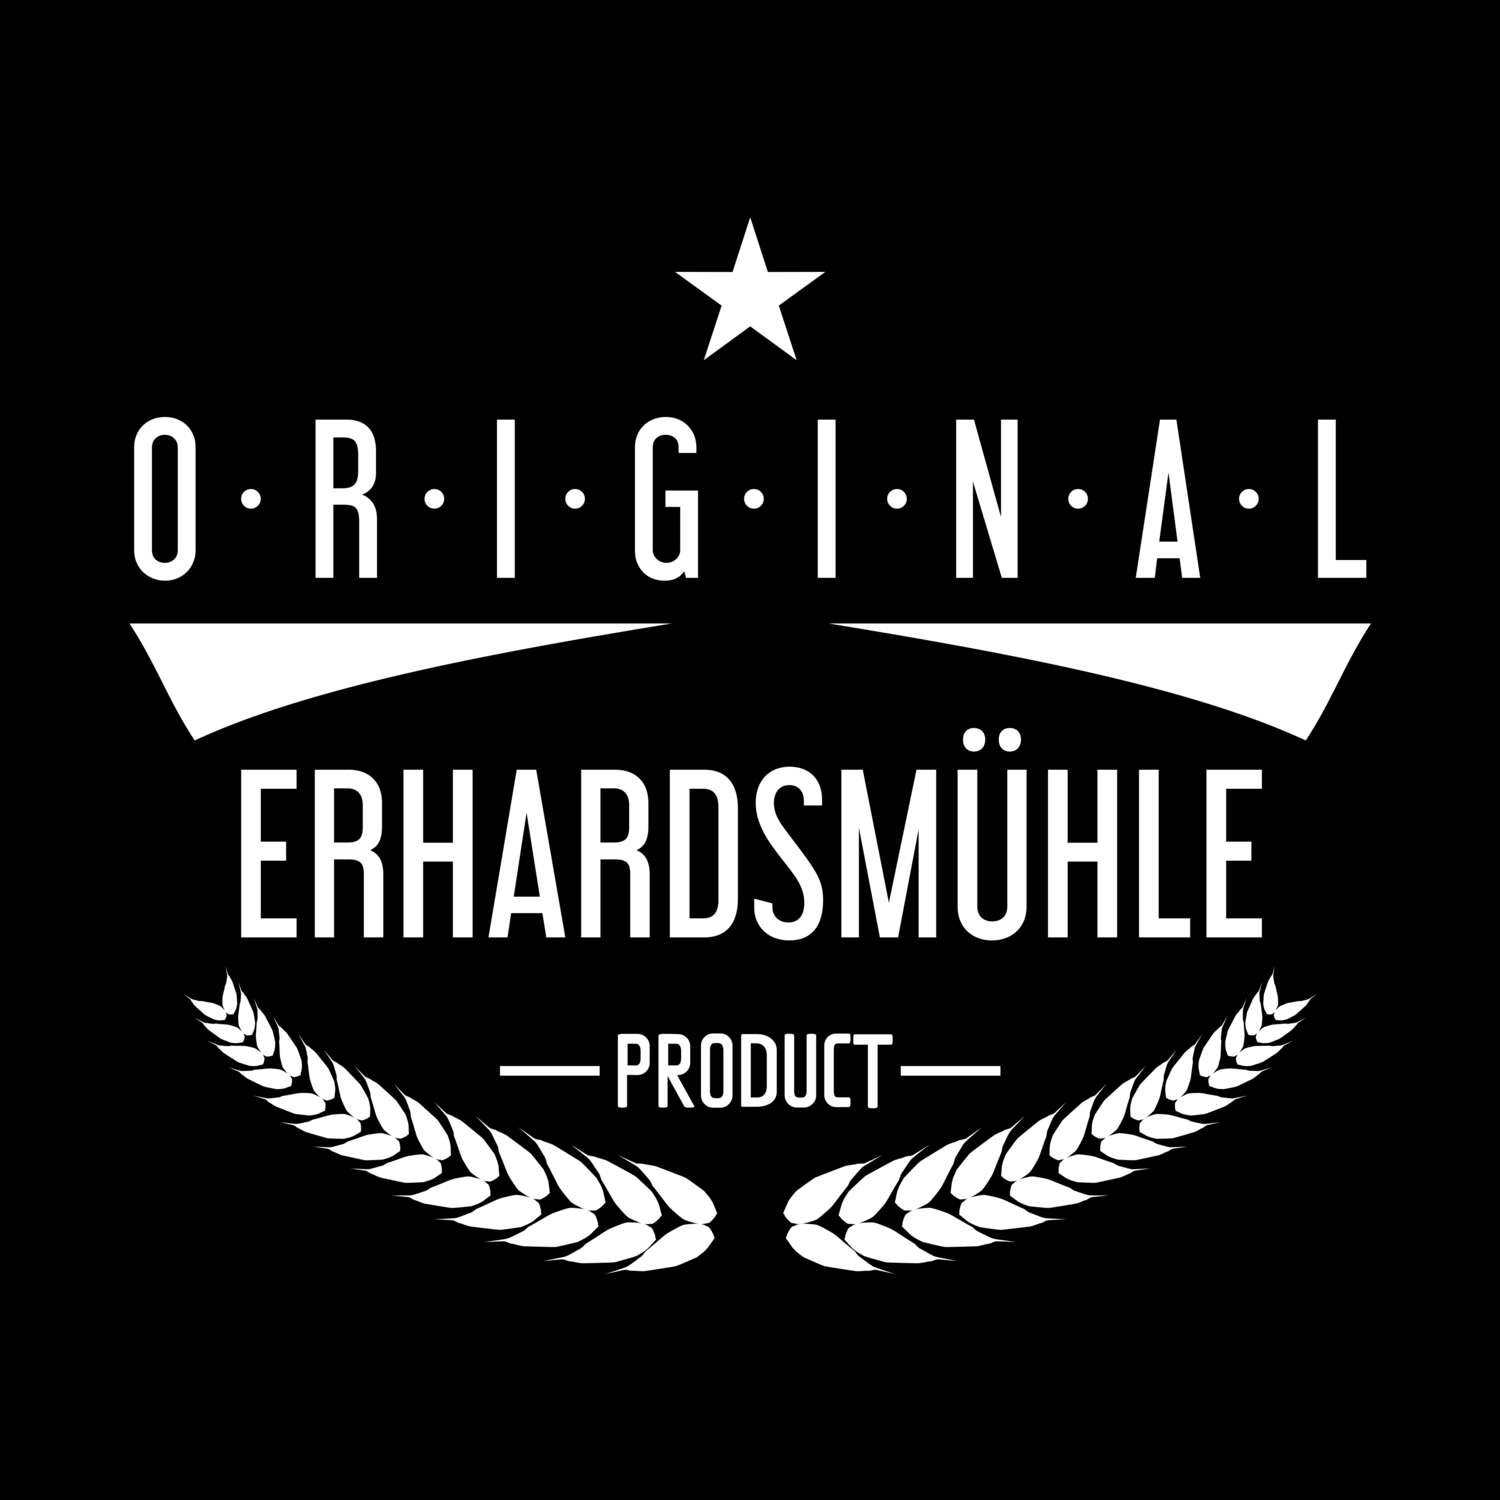 Erhardsmühle T-Shirt »Original Product«